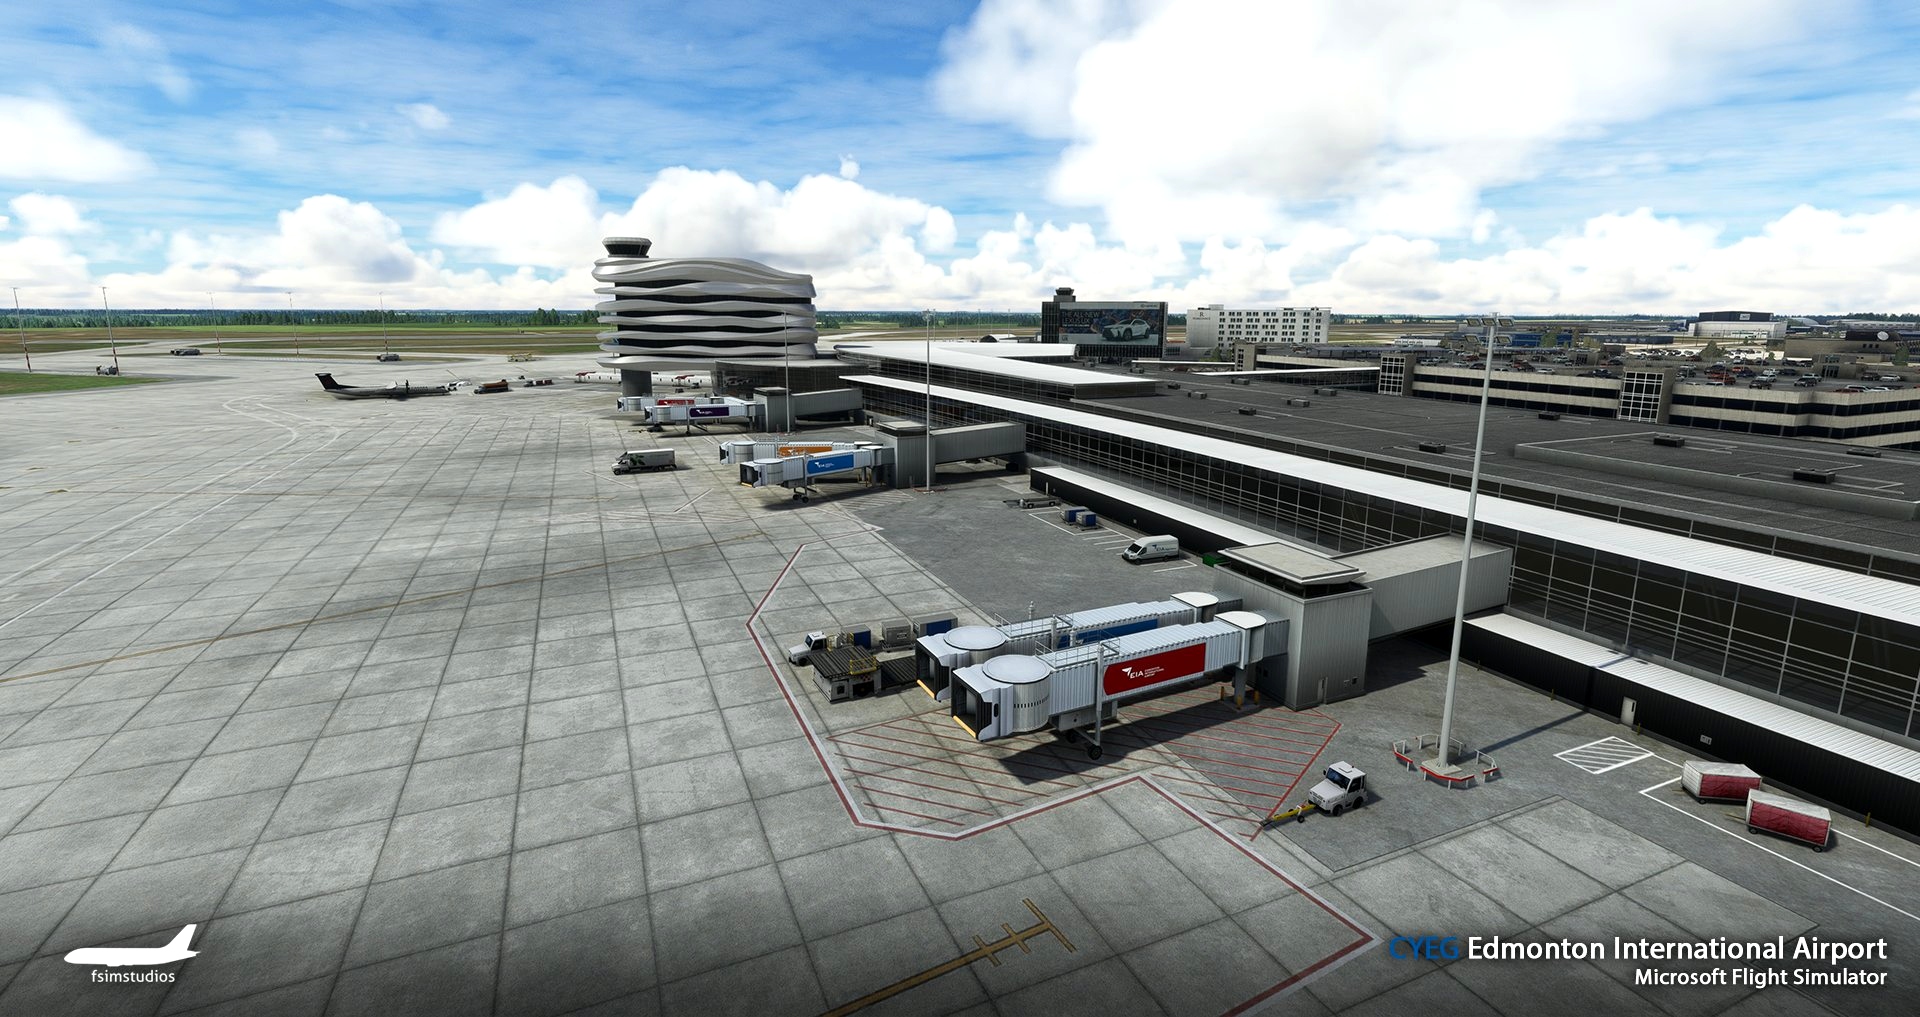 CYEG - Edmonton International Airport Microsoft Flight Simulator